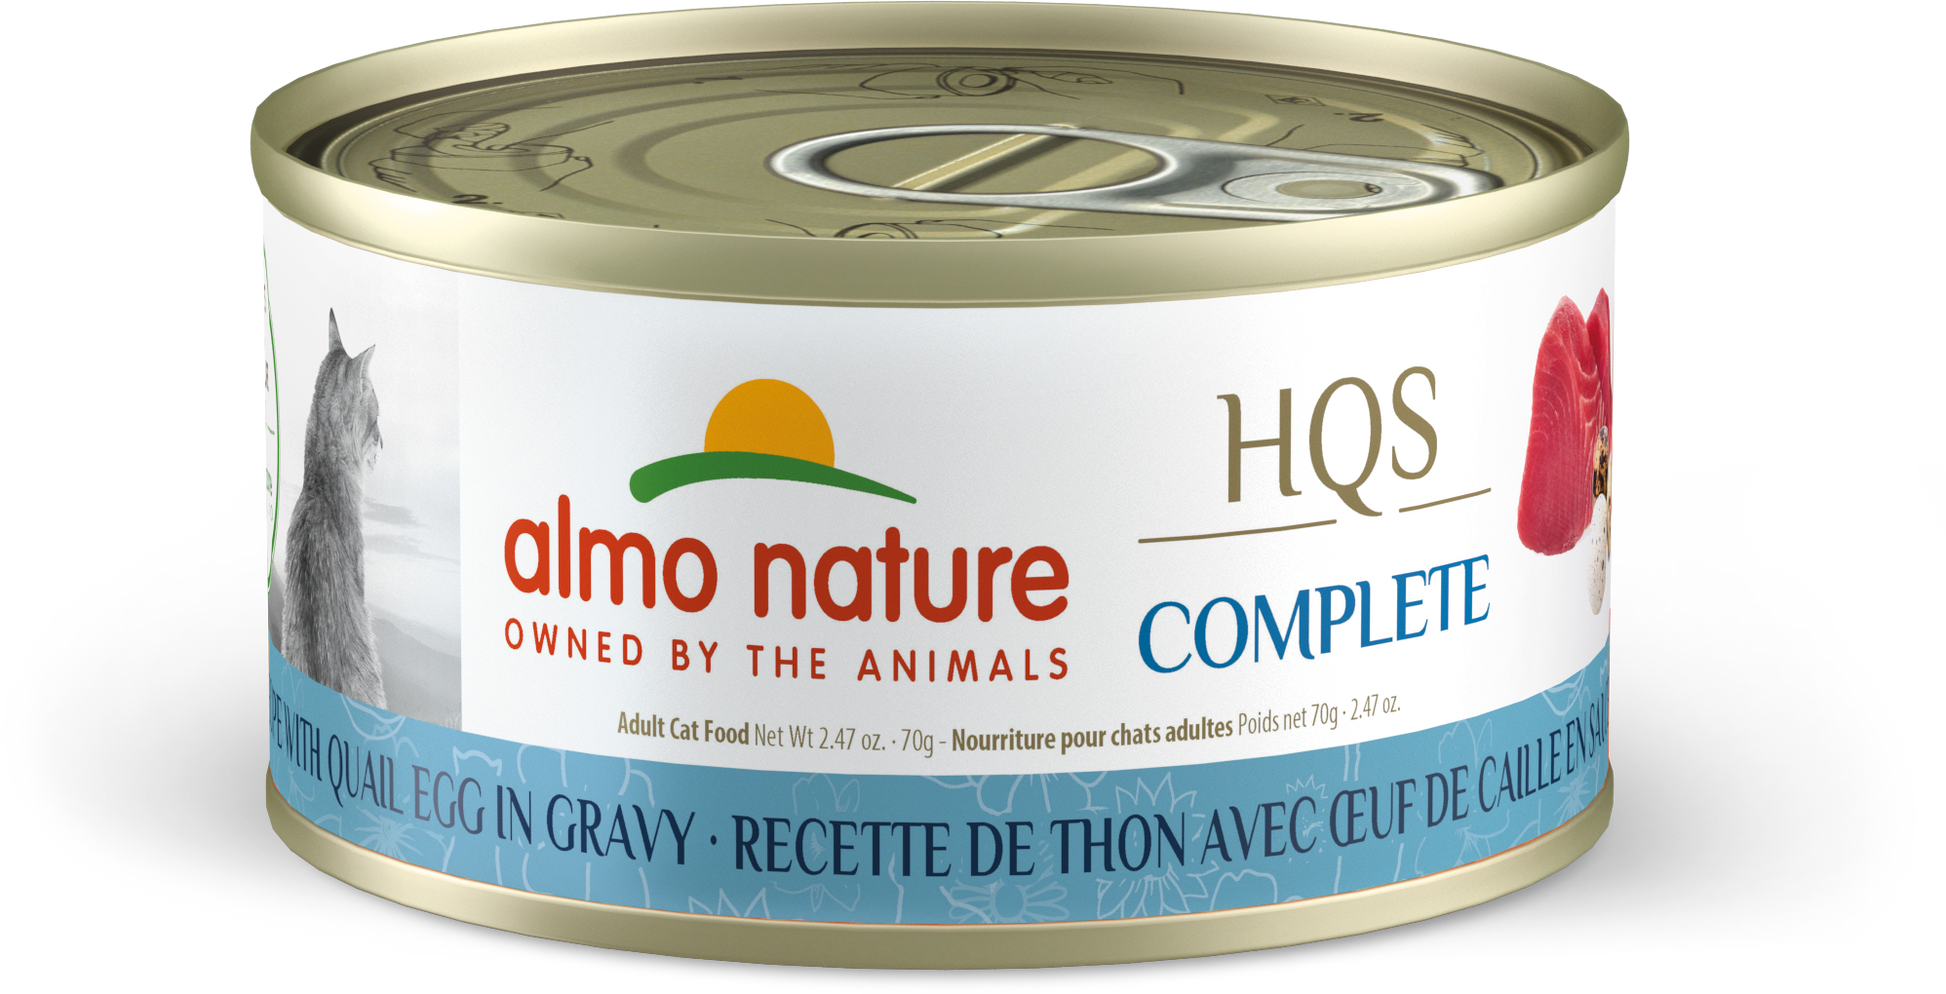 Almo Nature HQS Complete Tuna & Quail Egg Cat Can (70g) - Tail Blazers Etobicoke